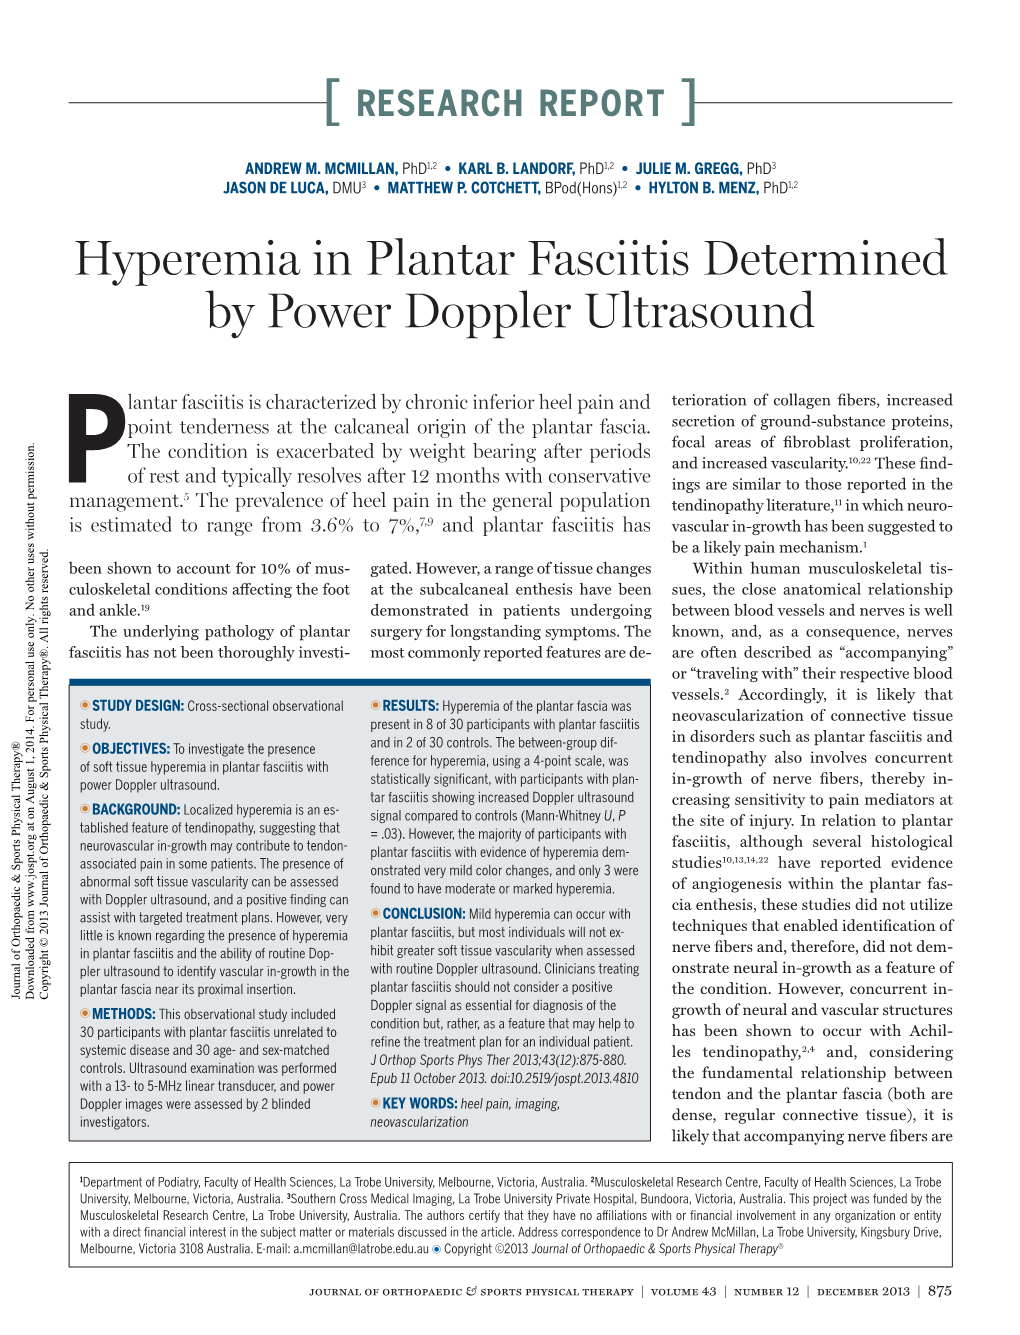 Hyperemia in Plantar Fasciitis Determined by Power Doppler Ultrasound